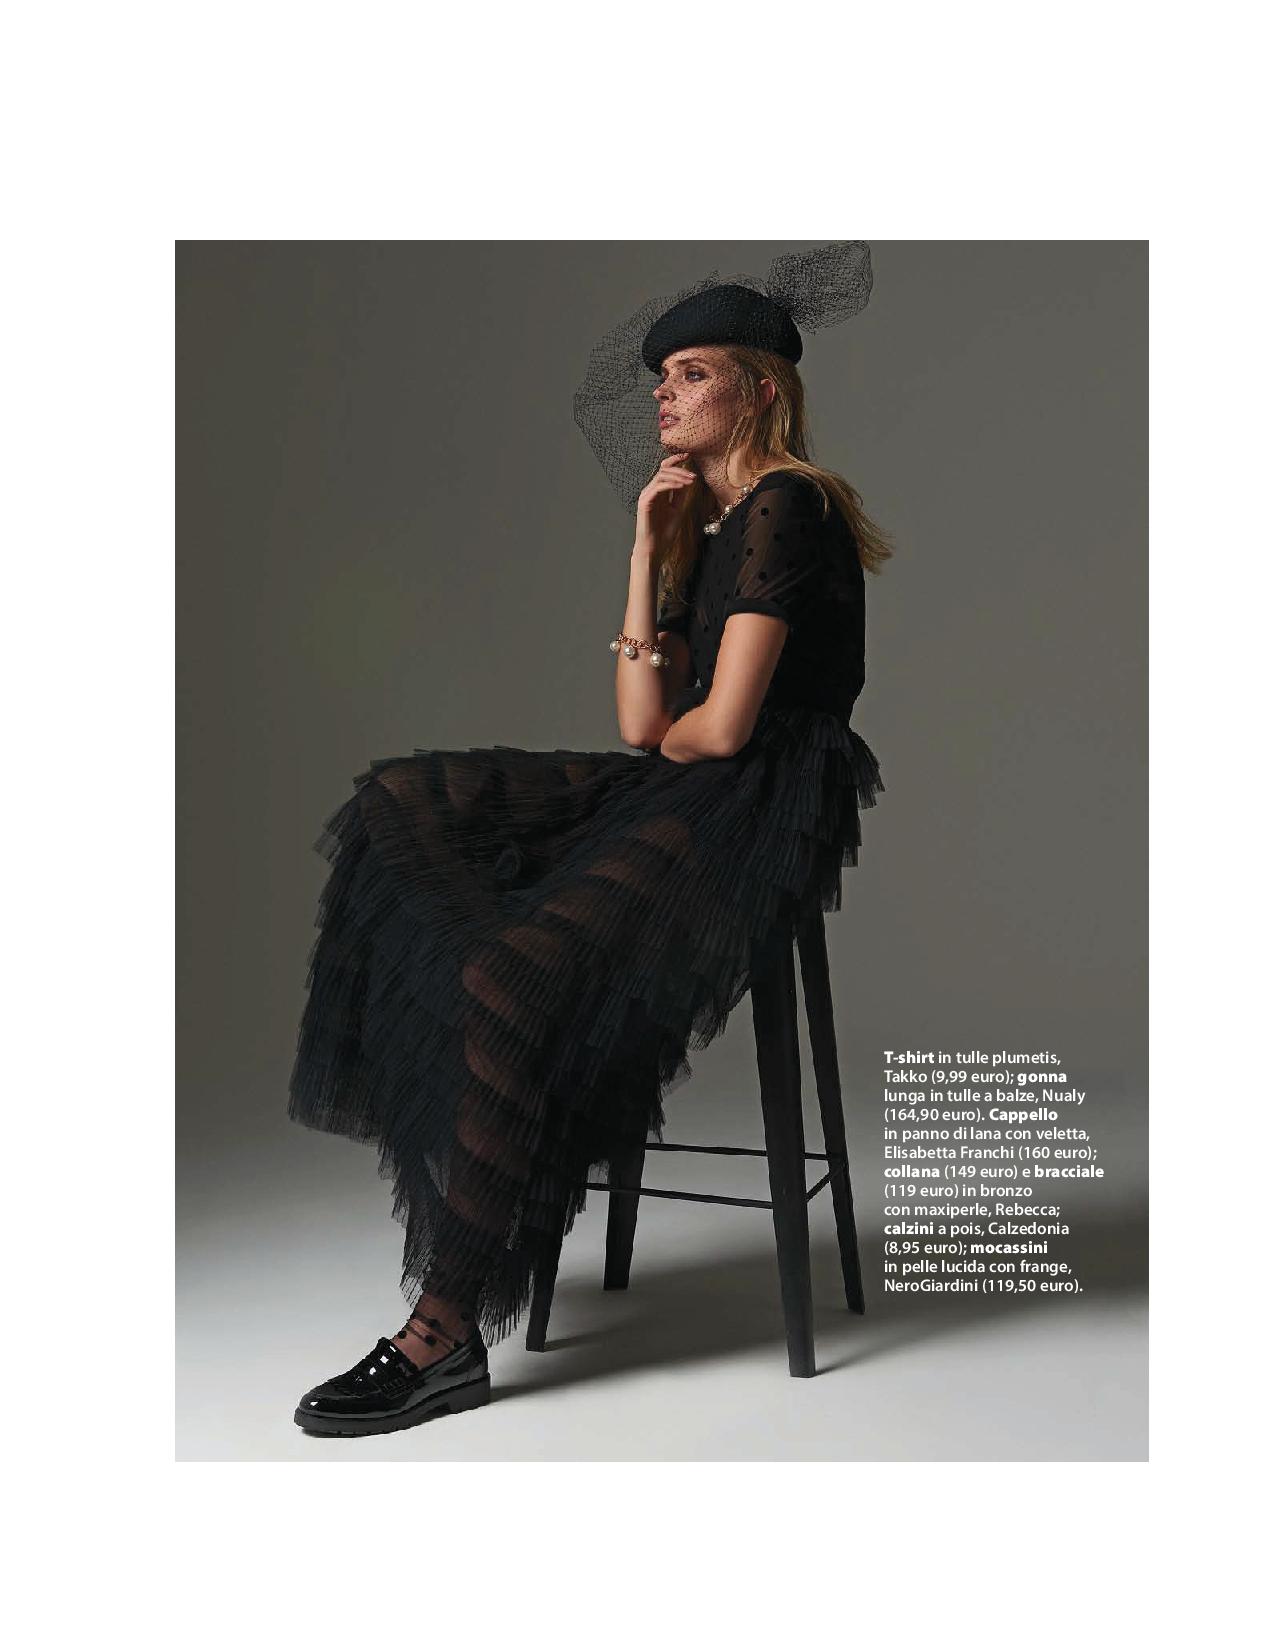 Agnete Hegelund - Page 10 - Female Fashion Models - Bellazon